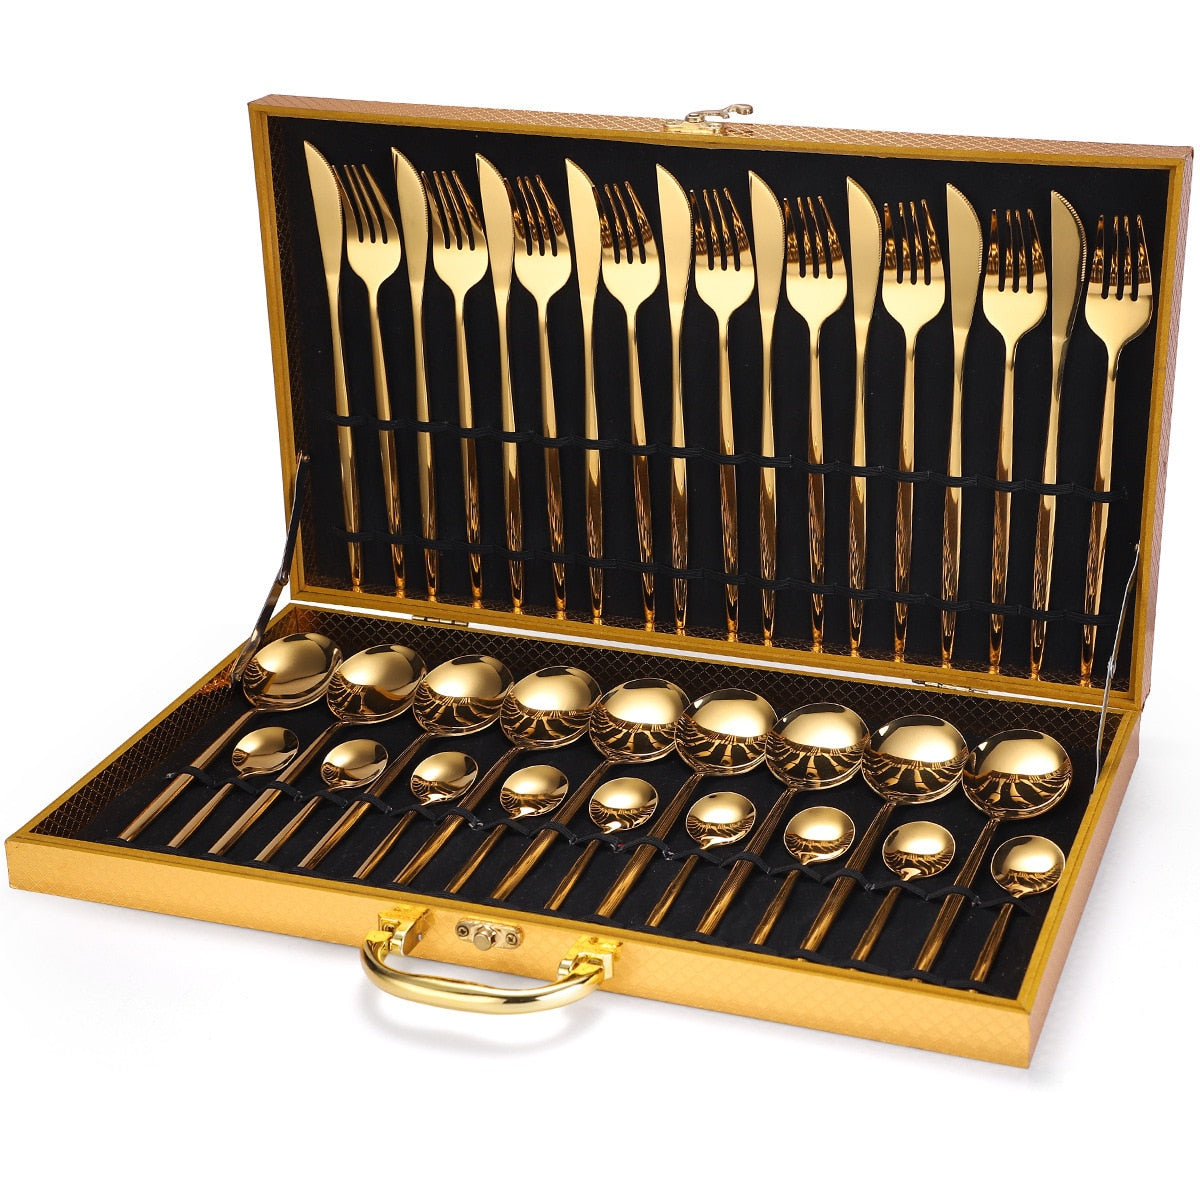 Gold Dinnerware Set Stainless - 24 pcs Gold Tableware Set